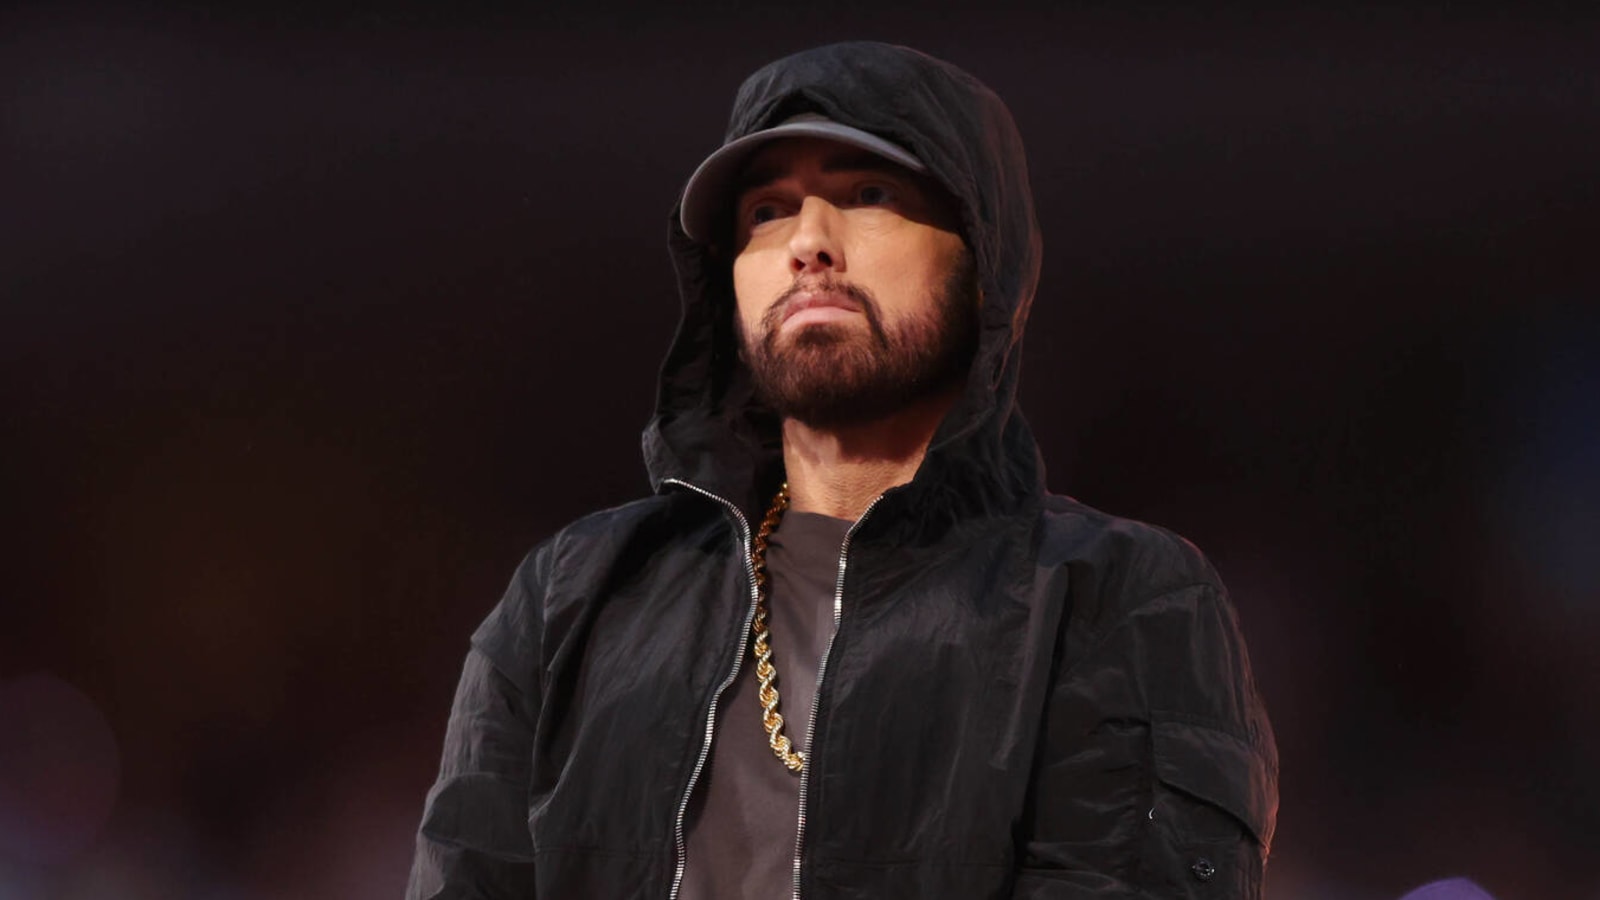 Watch: Eminem sends Matthew Stafford message ahead of Lions-Rams